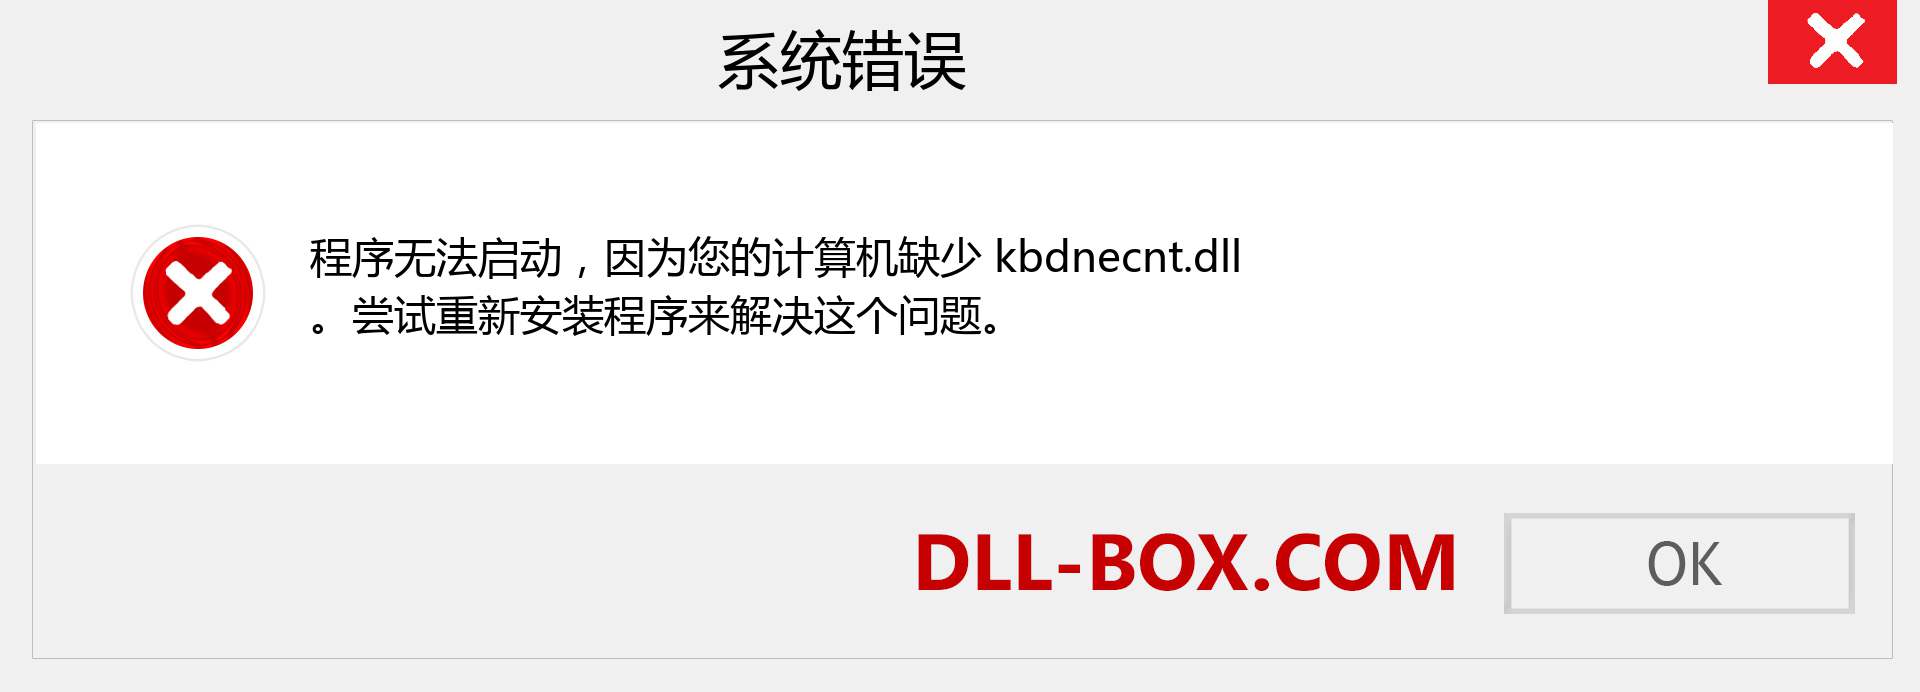 kbdnecnt.dll 文件丢失？。 适用于 Windows 7、8、10 的下载 - 修复 Windows、照片、图像上的 kbdnecnt dll 丢失错误